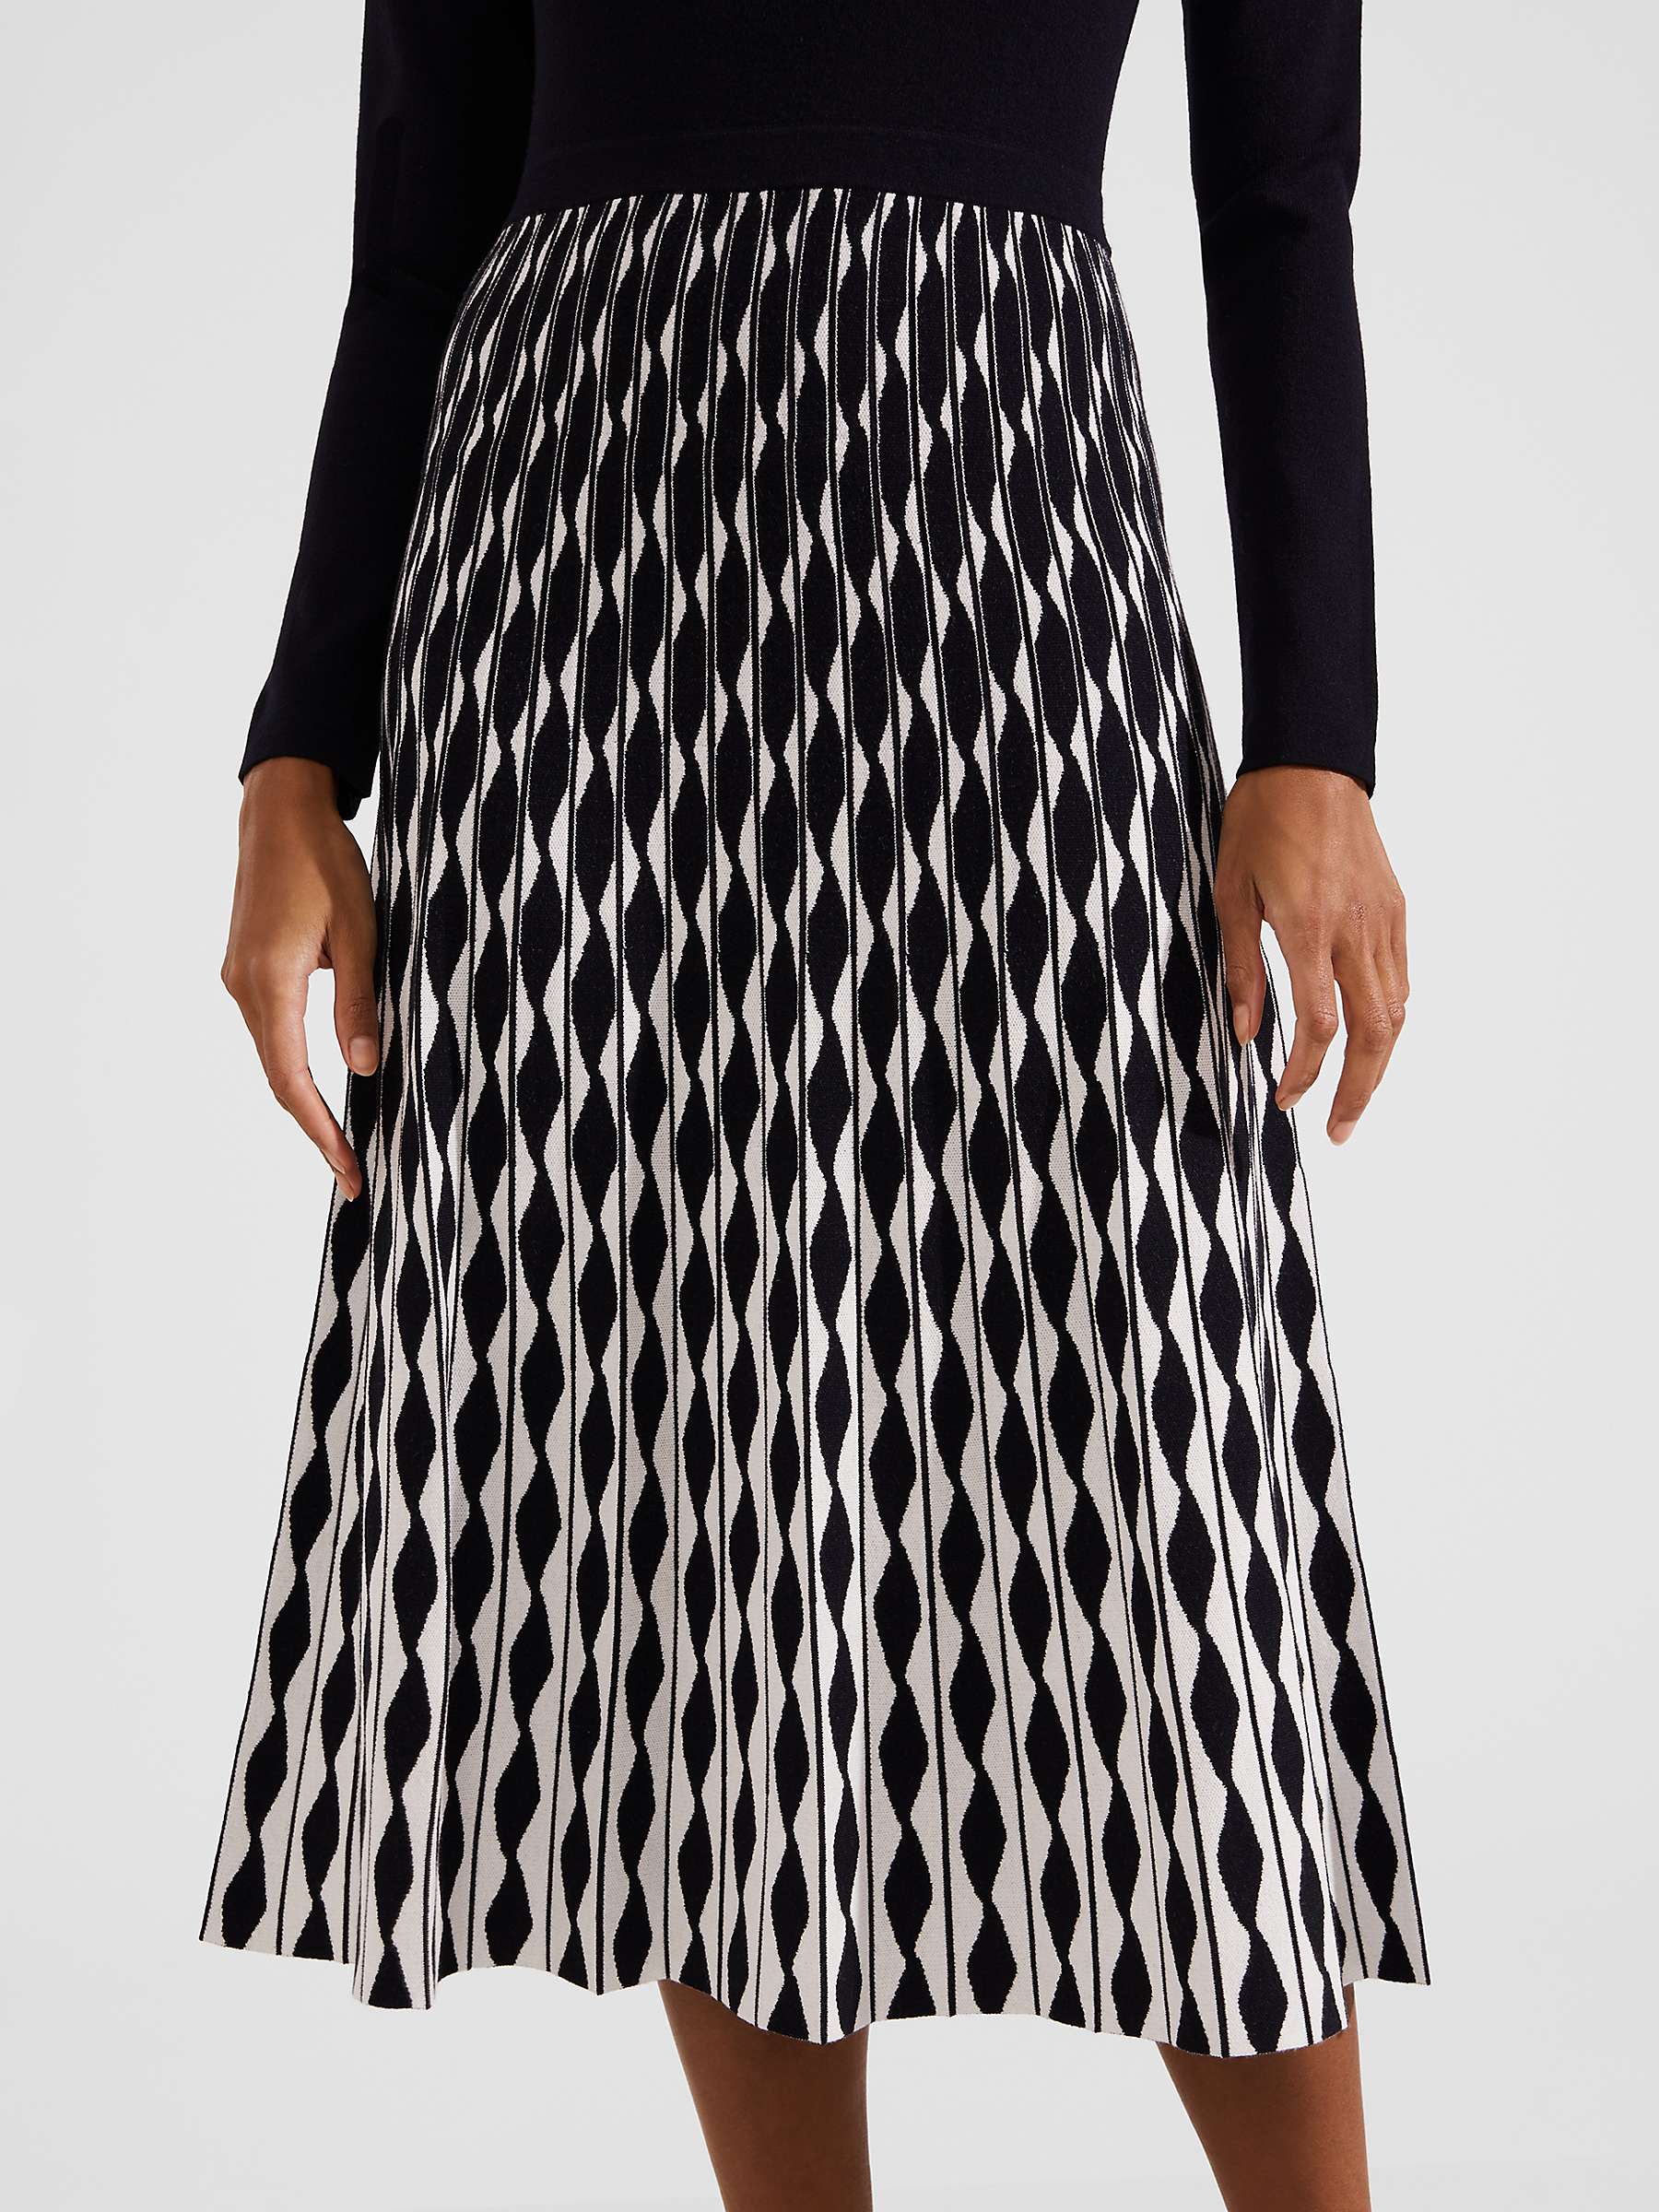 Buy Hobbs Larna Knitted Dress, Navy/Ivory Online at johnlewis.com